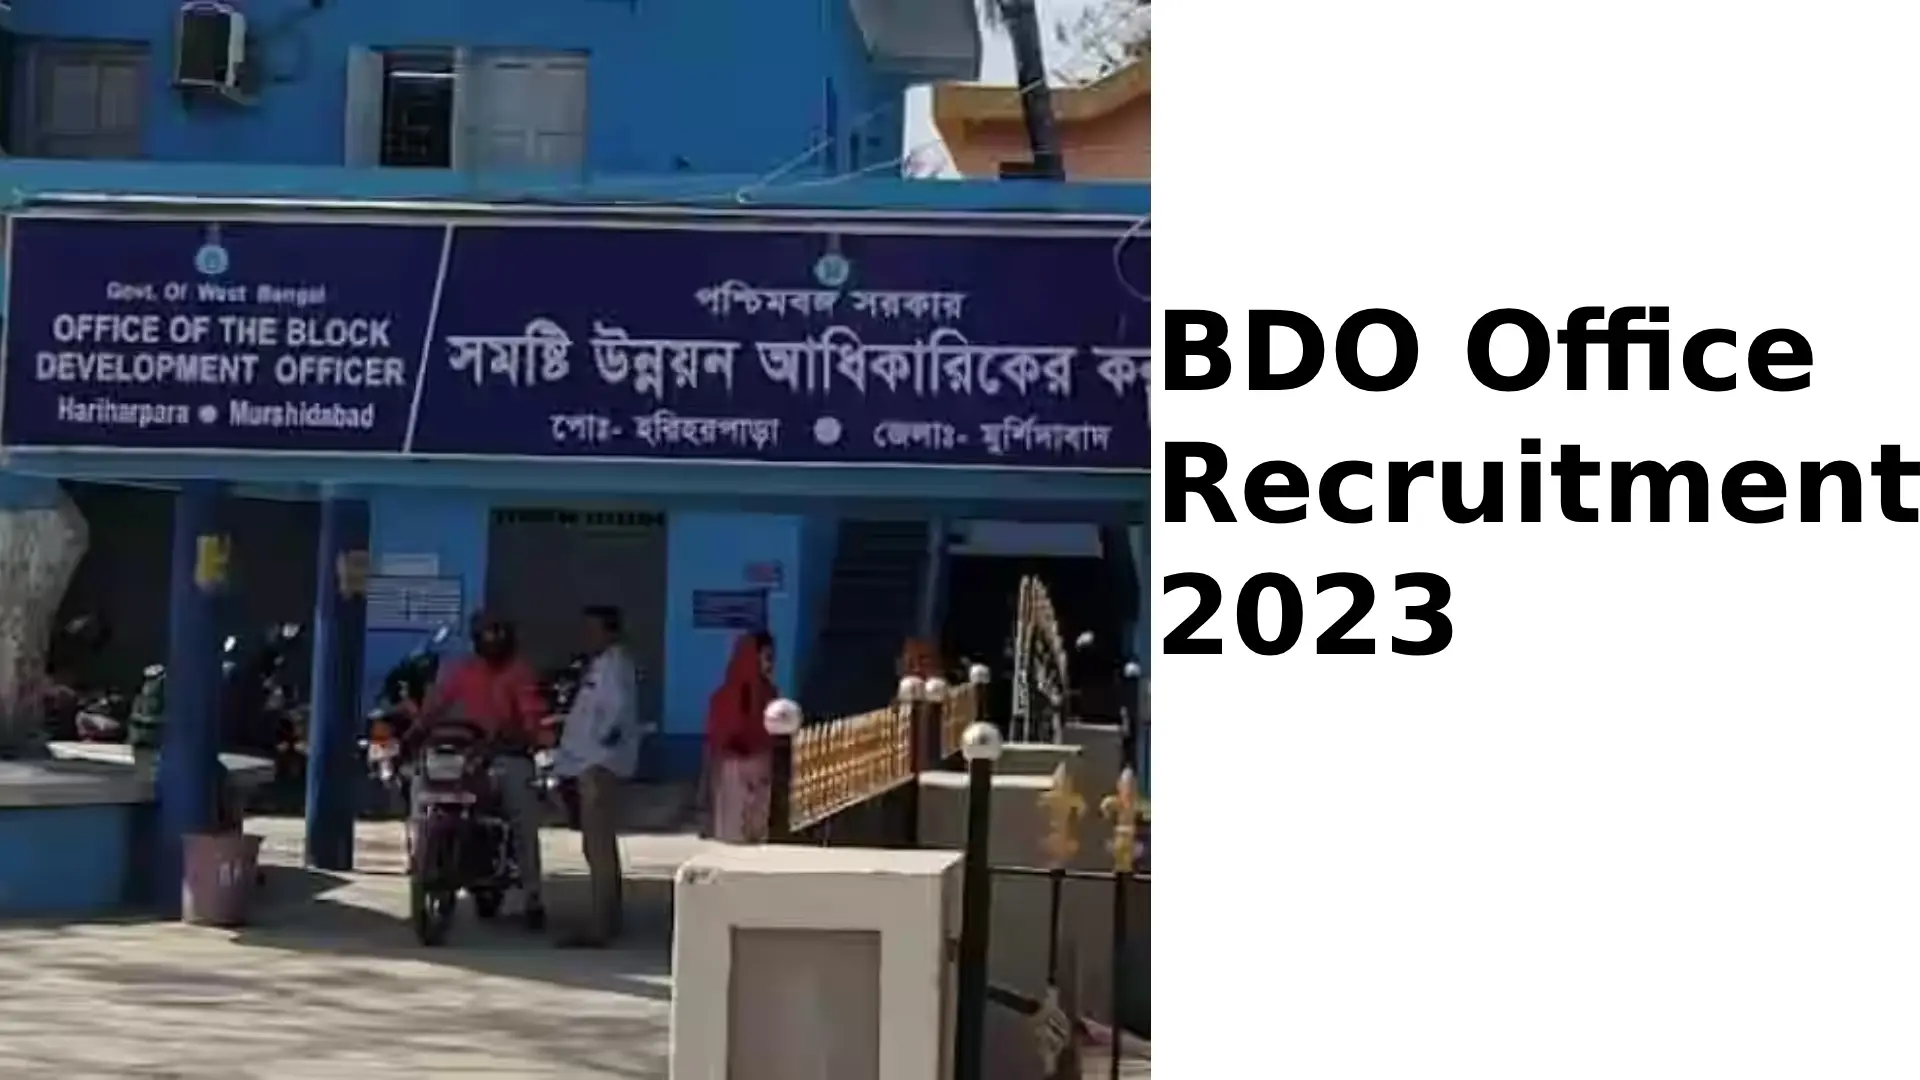 BDO Office Recruitment 2023